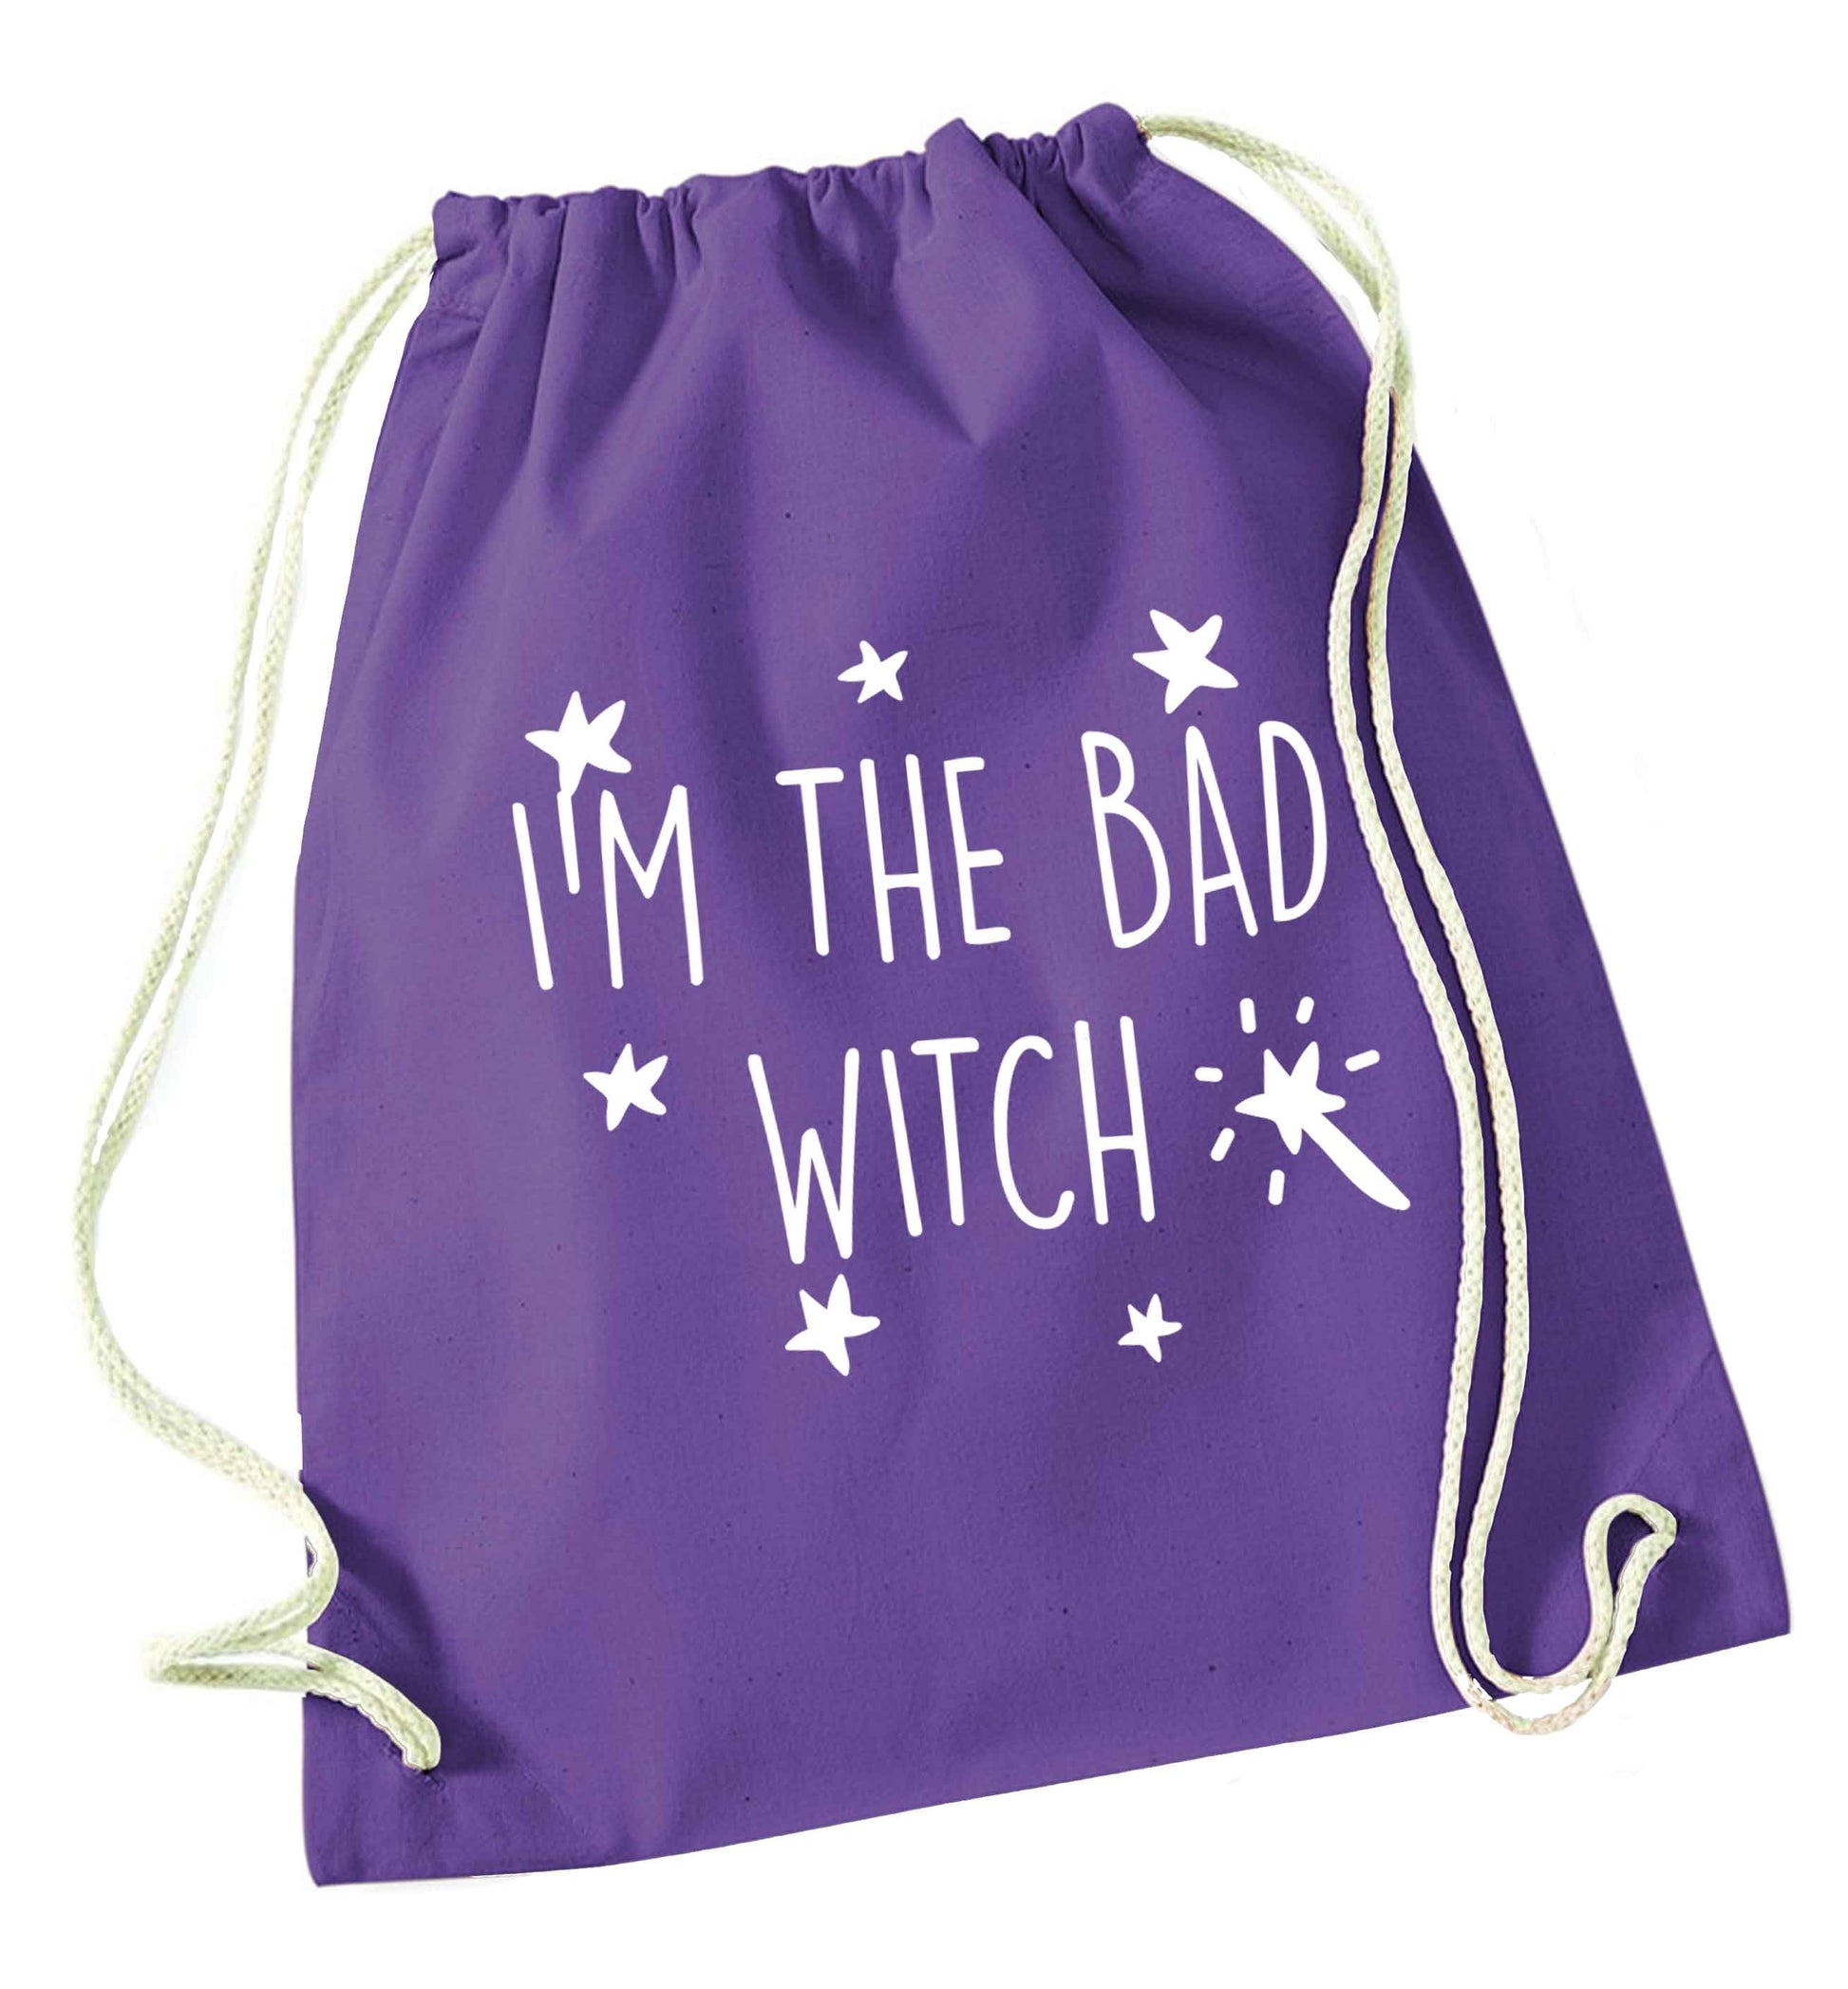 Bad witch purple drawstring bag